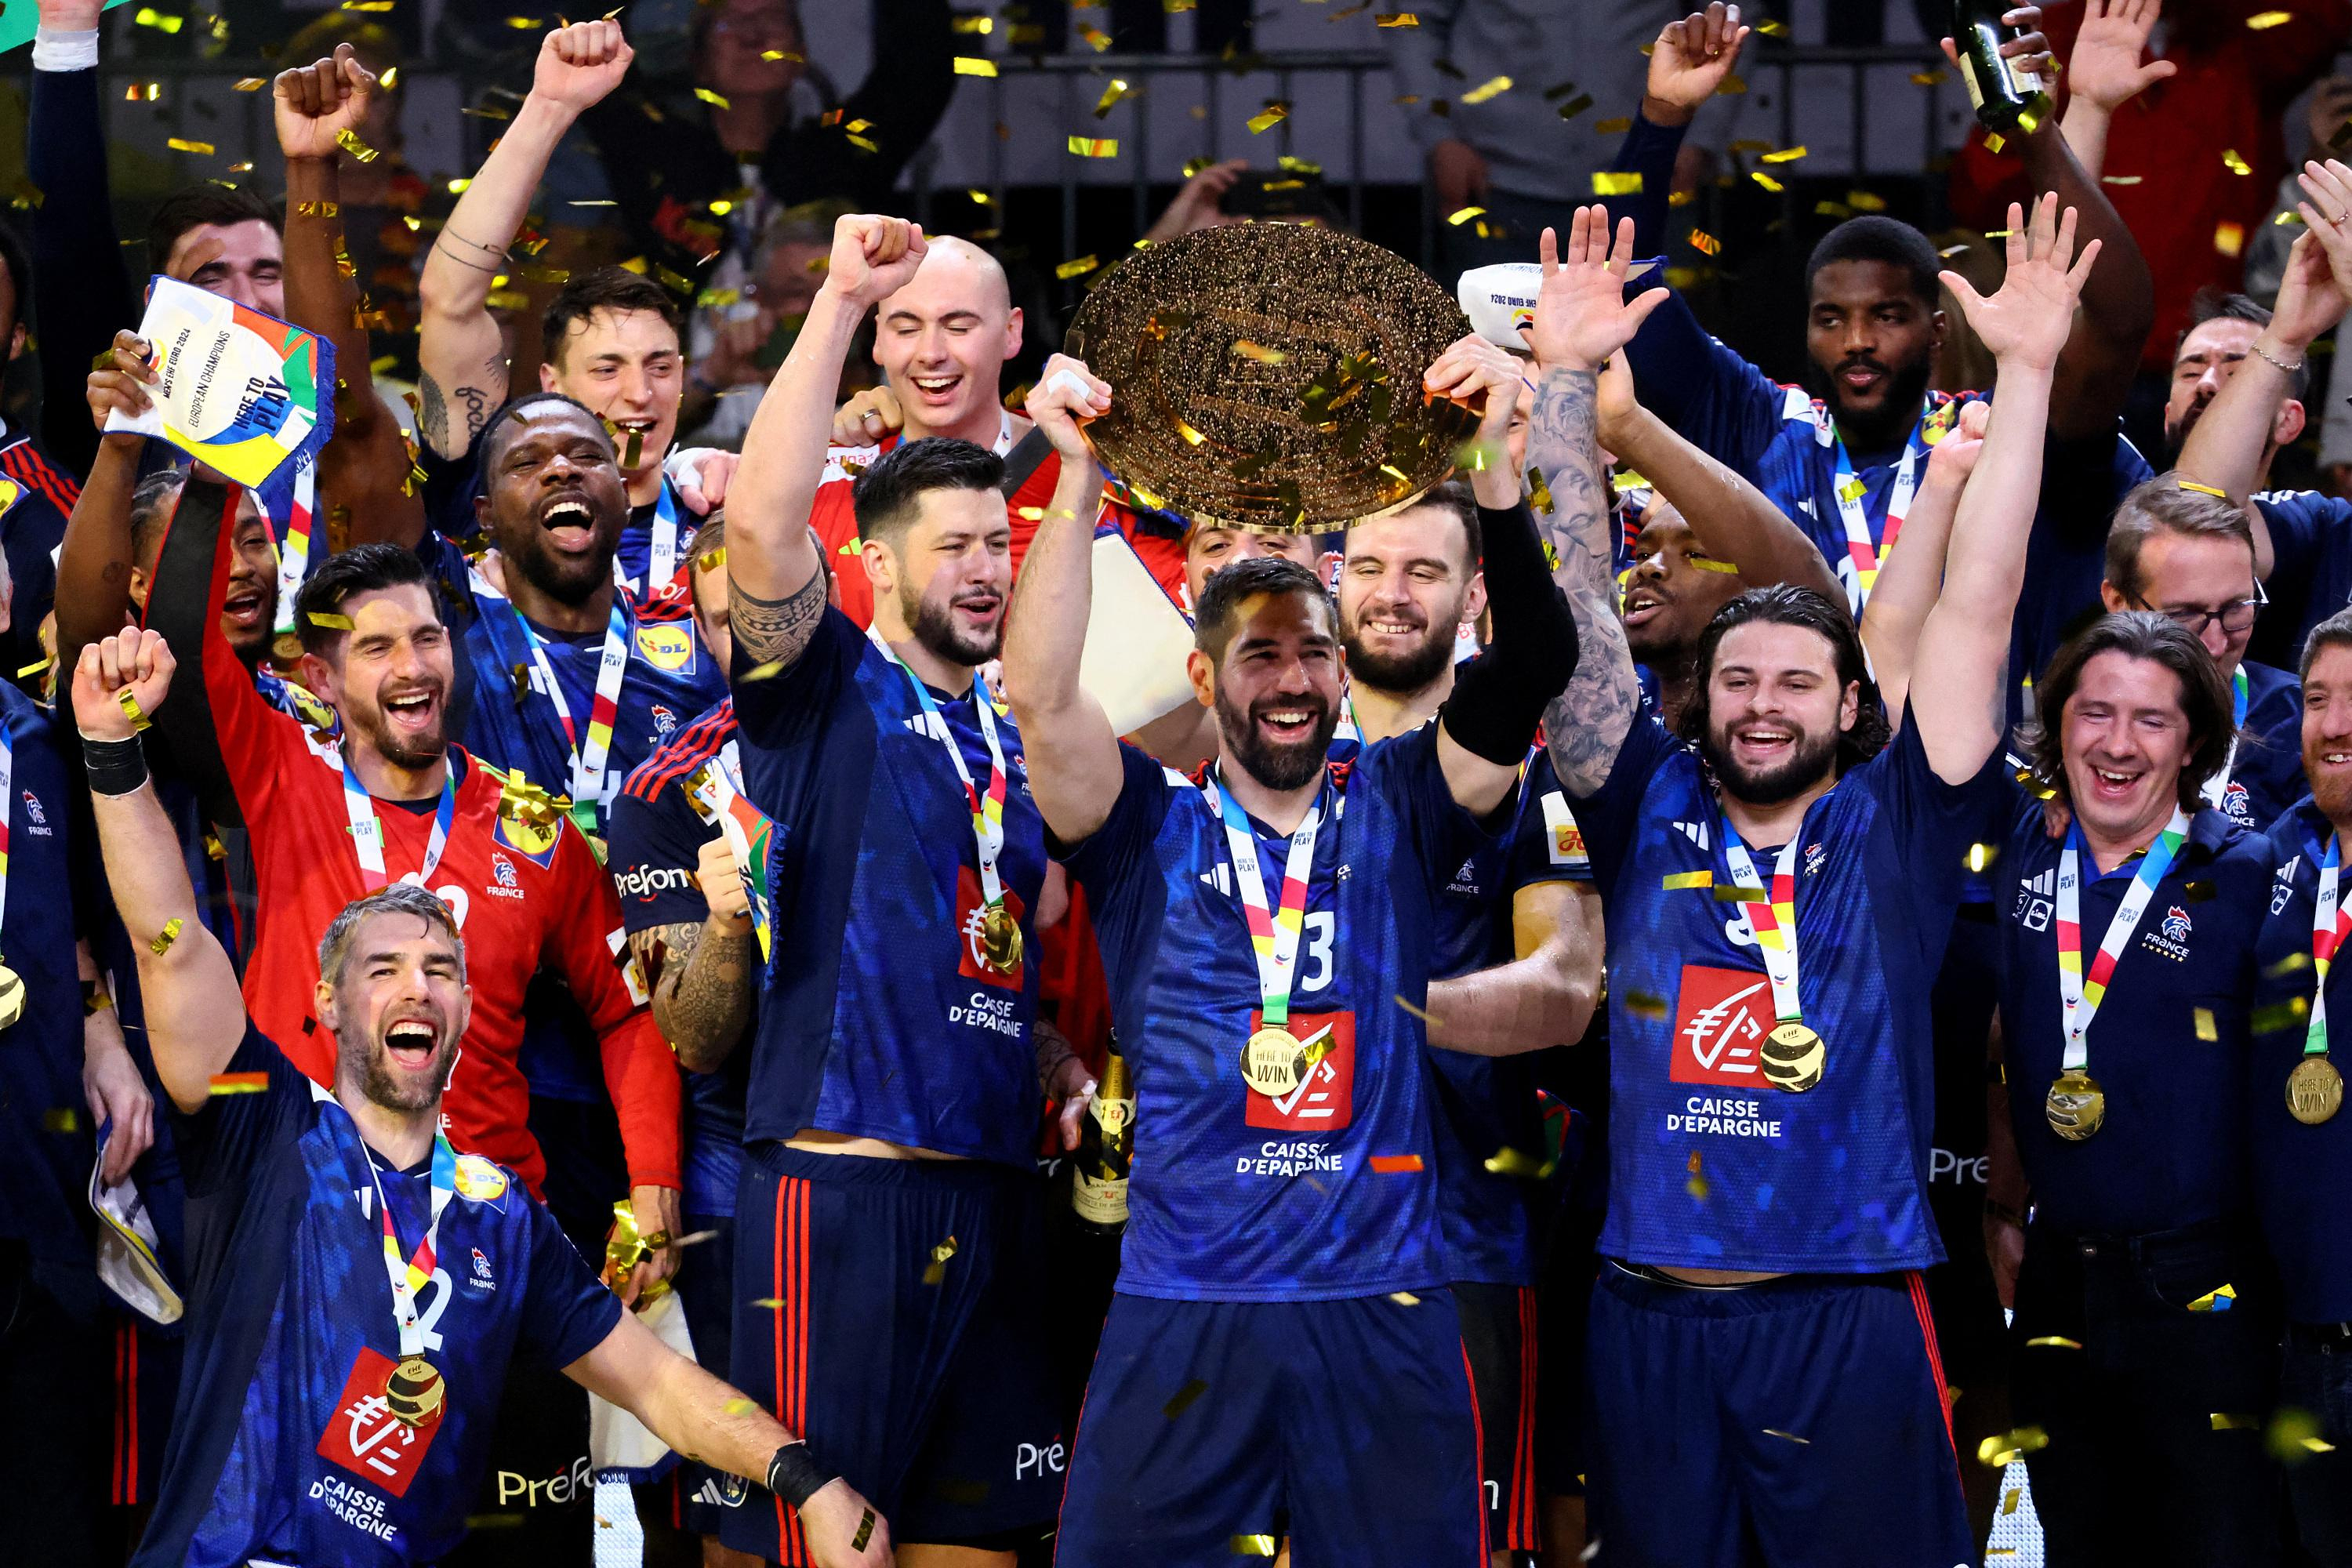 Handball: European champion, the French team received by Emmanuel Macron at the Élysée